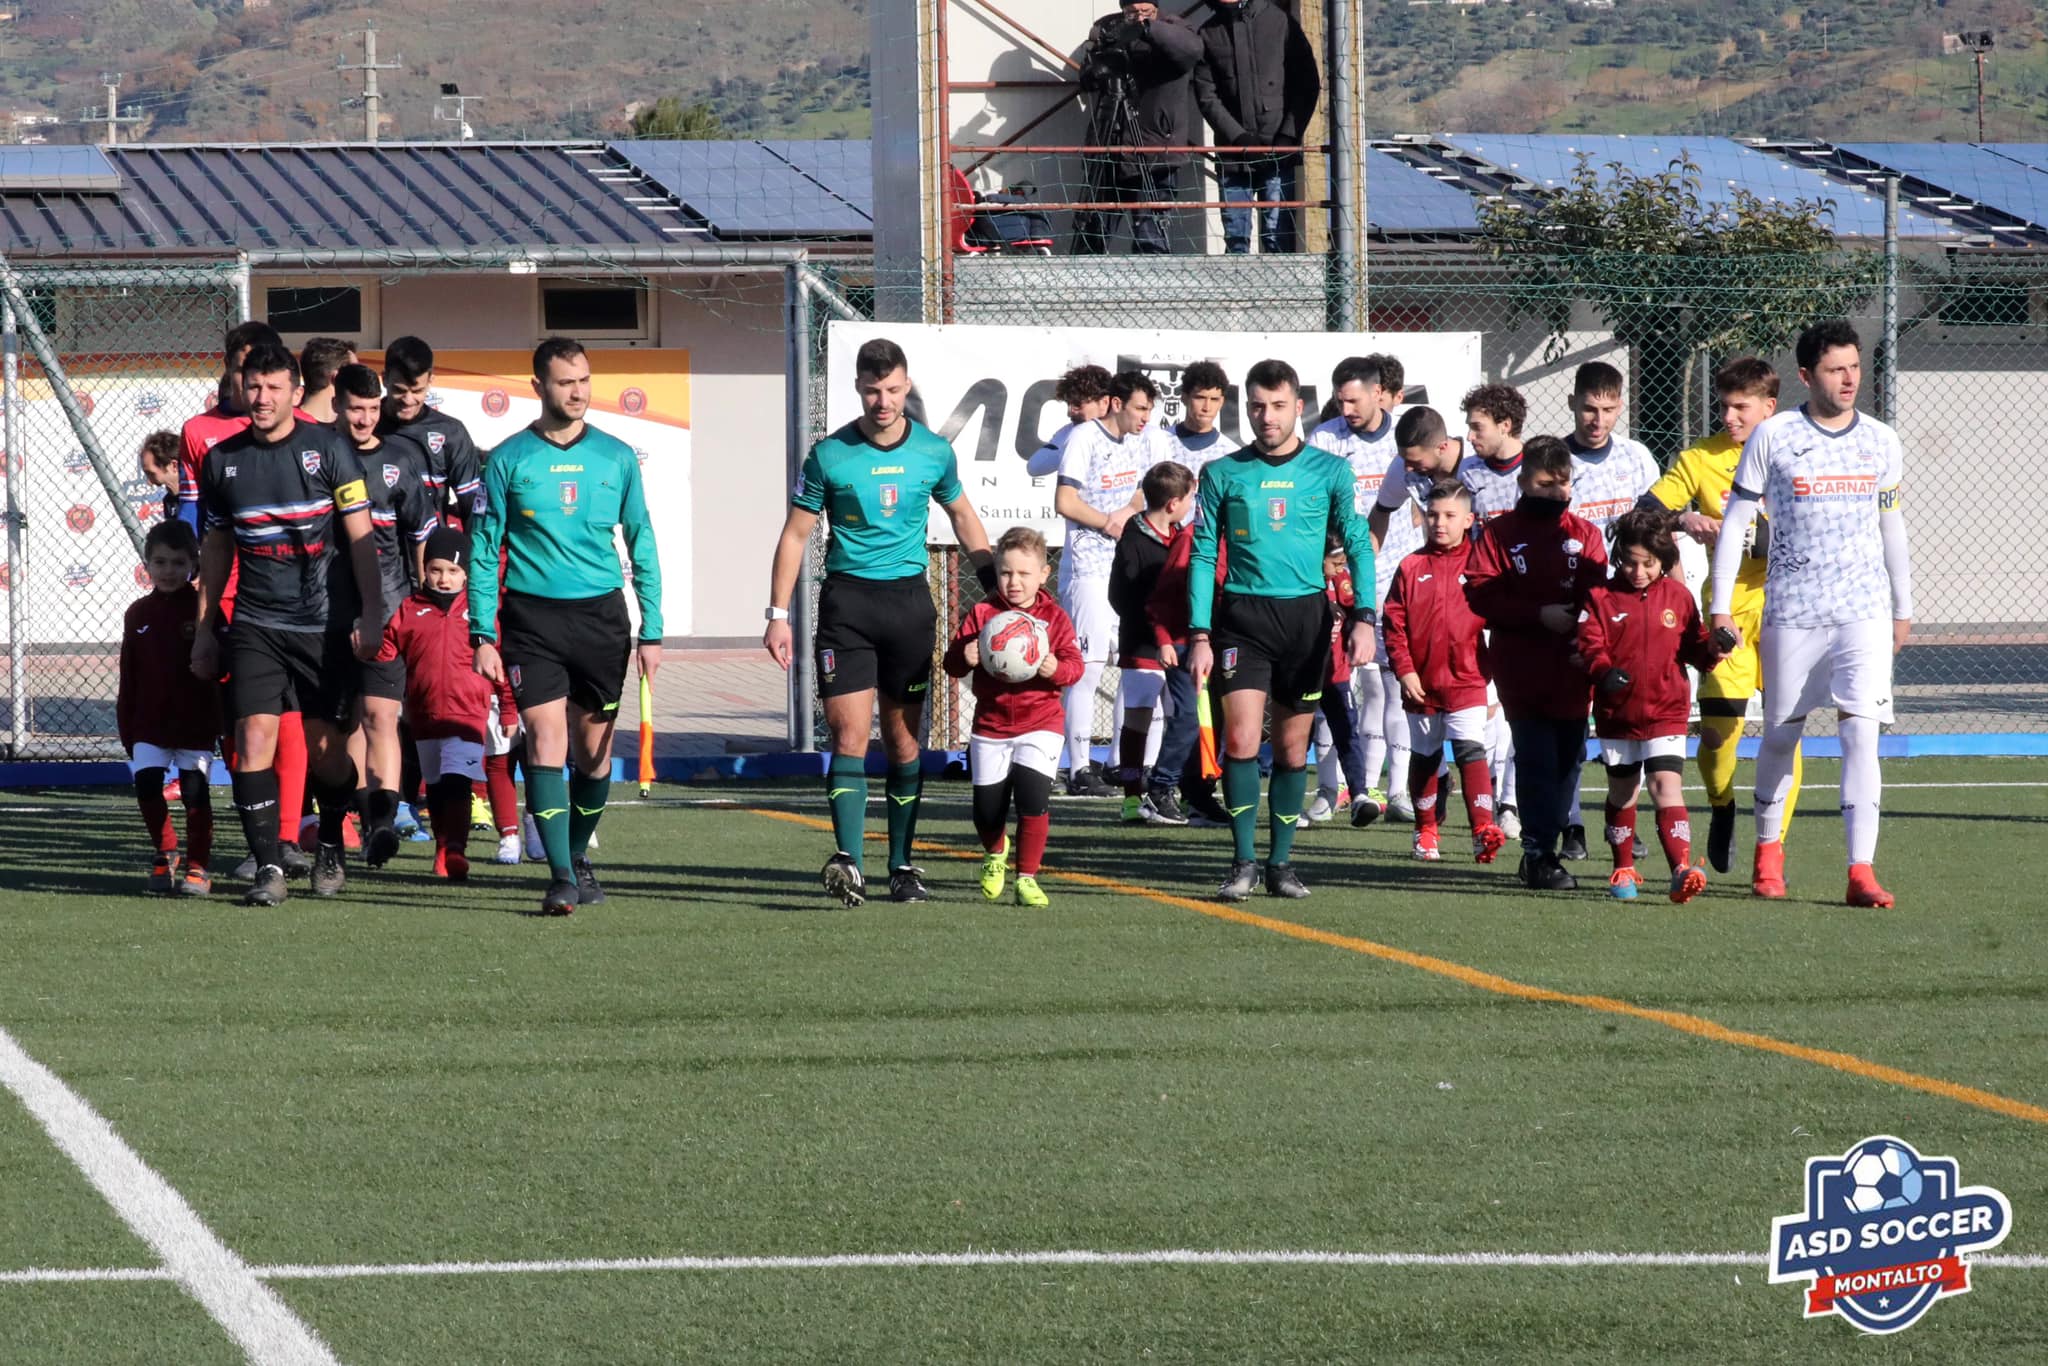 La partita tra Soccer Montalto e Amantea Calcio.